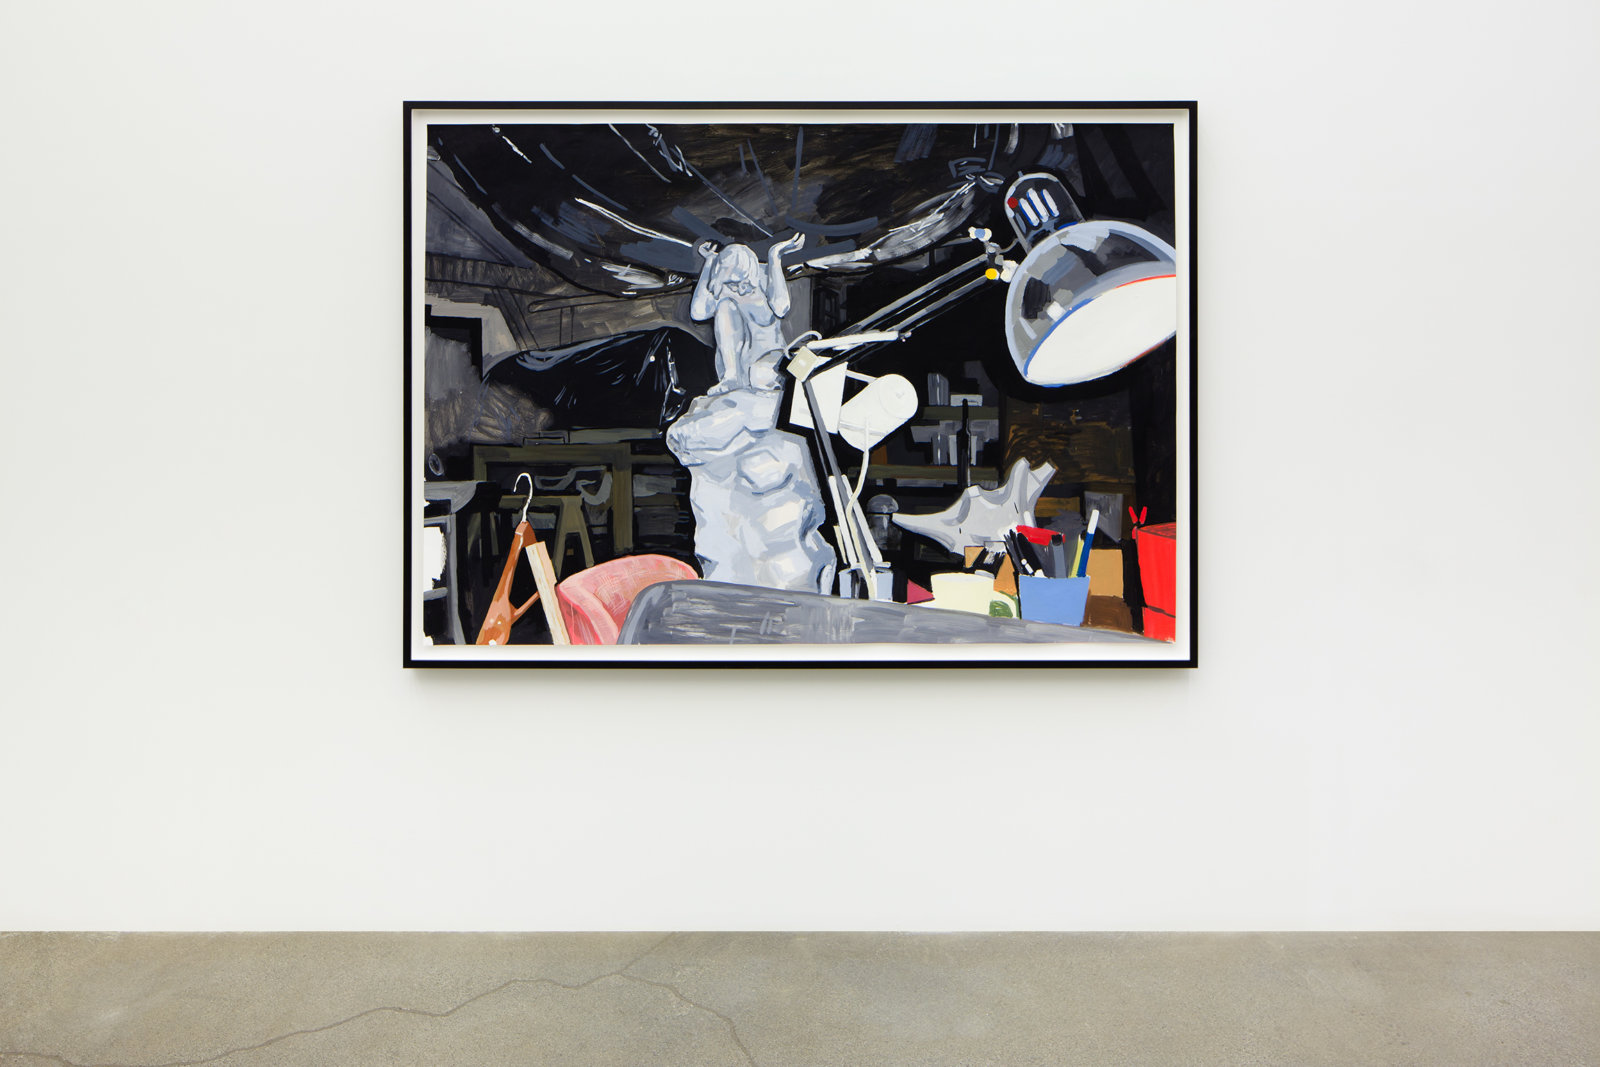 Damian Moppett, Caryatid, Lamp and Sofa in Studio, 2006, oil on paper, 58 x 81 in. (147 x 206 cm)